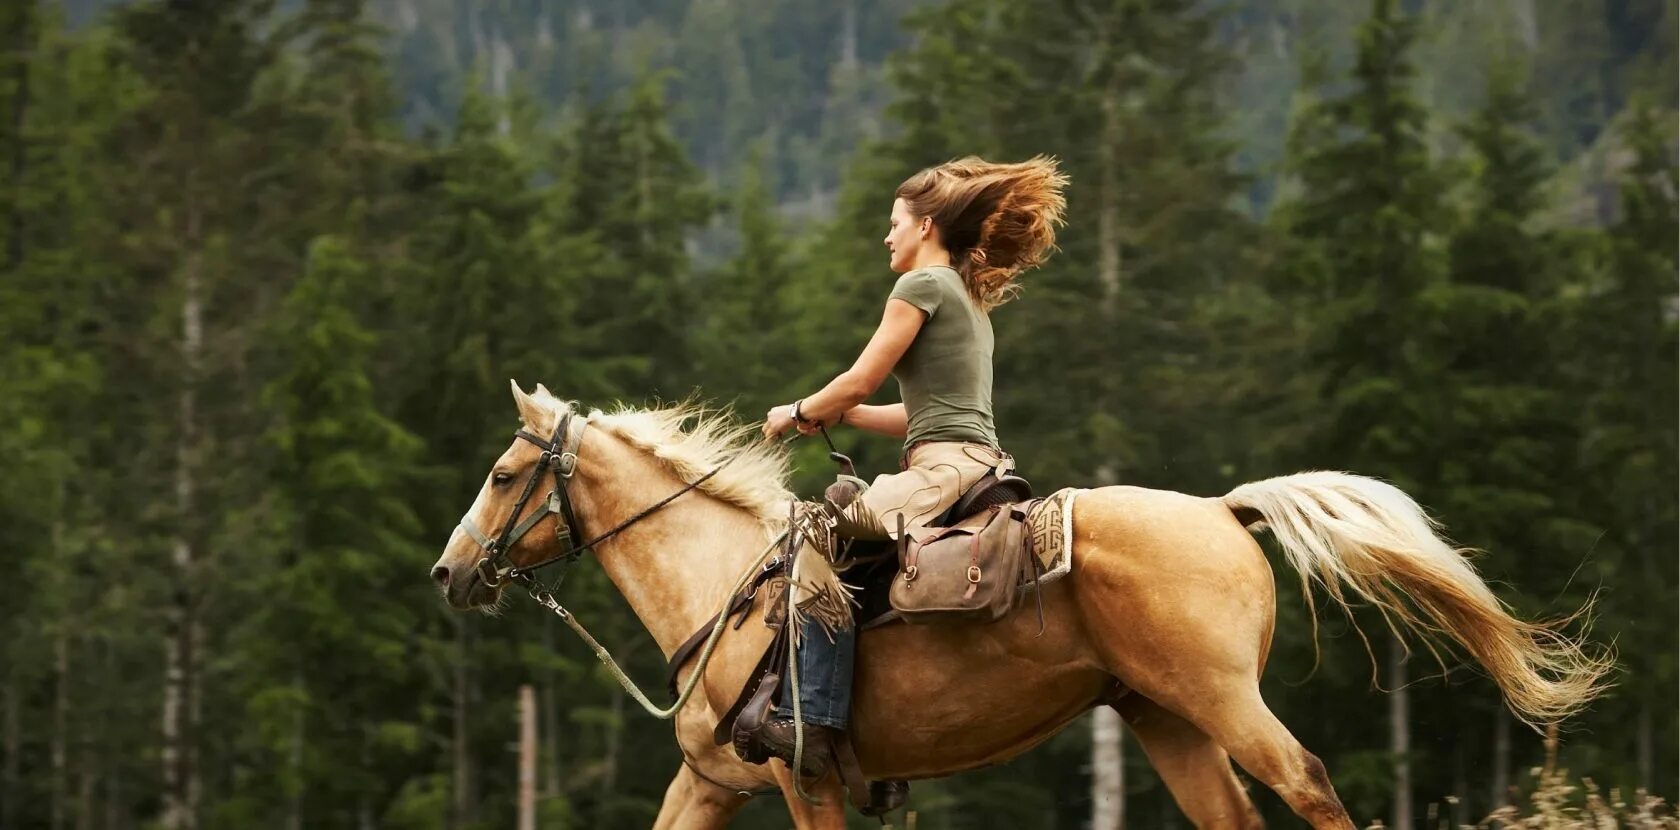 Скачет мс. Верхом на лошади. Скачет на коне. Девушка верхом на лошади. Человек на лошади в горах.